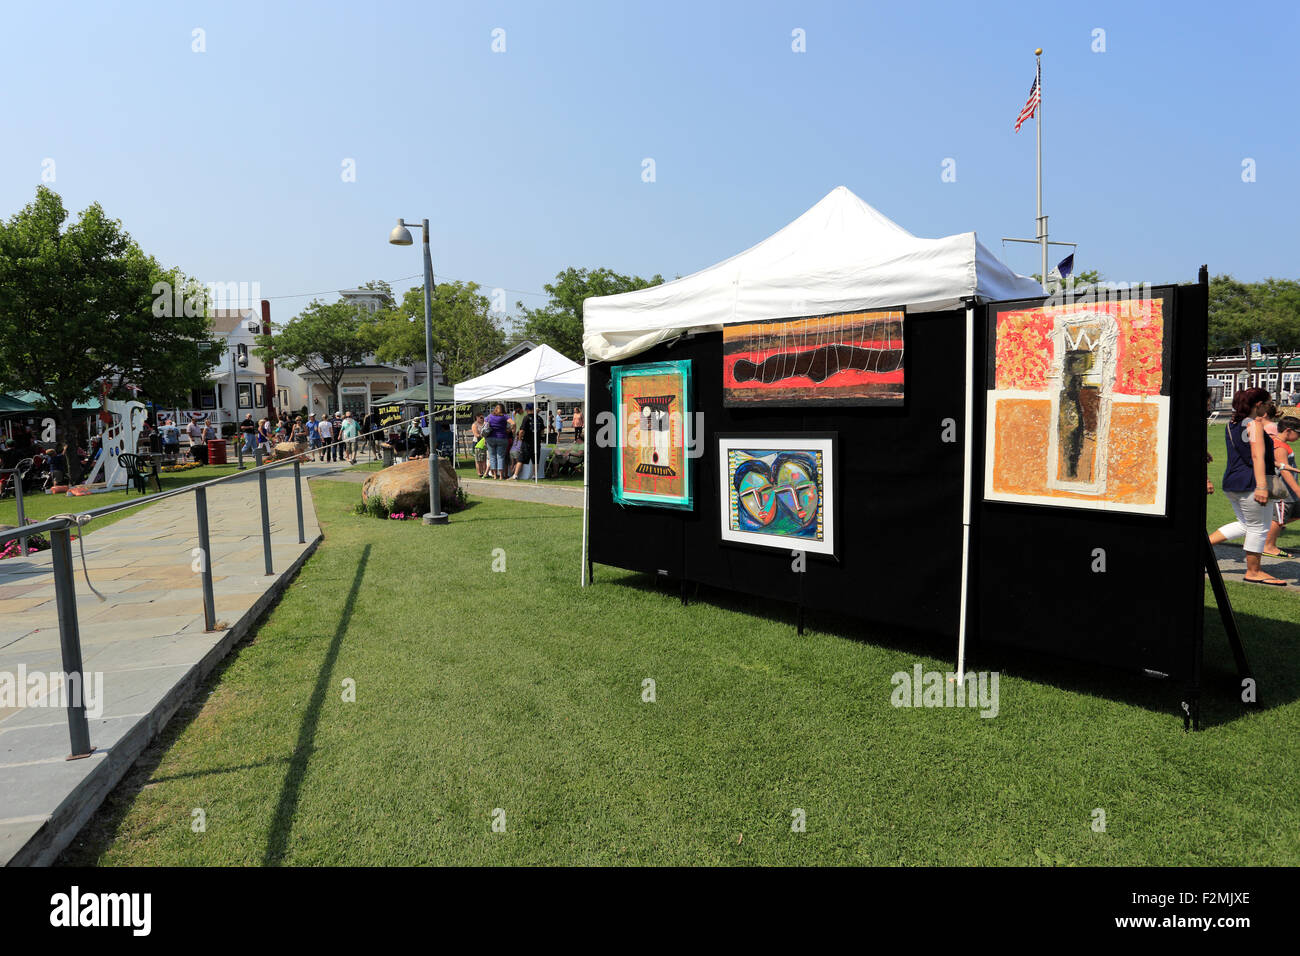 Outdoor art festival Greenport harbor Long Island New York Stock Photo